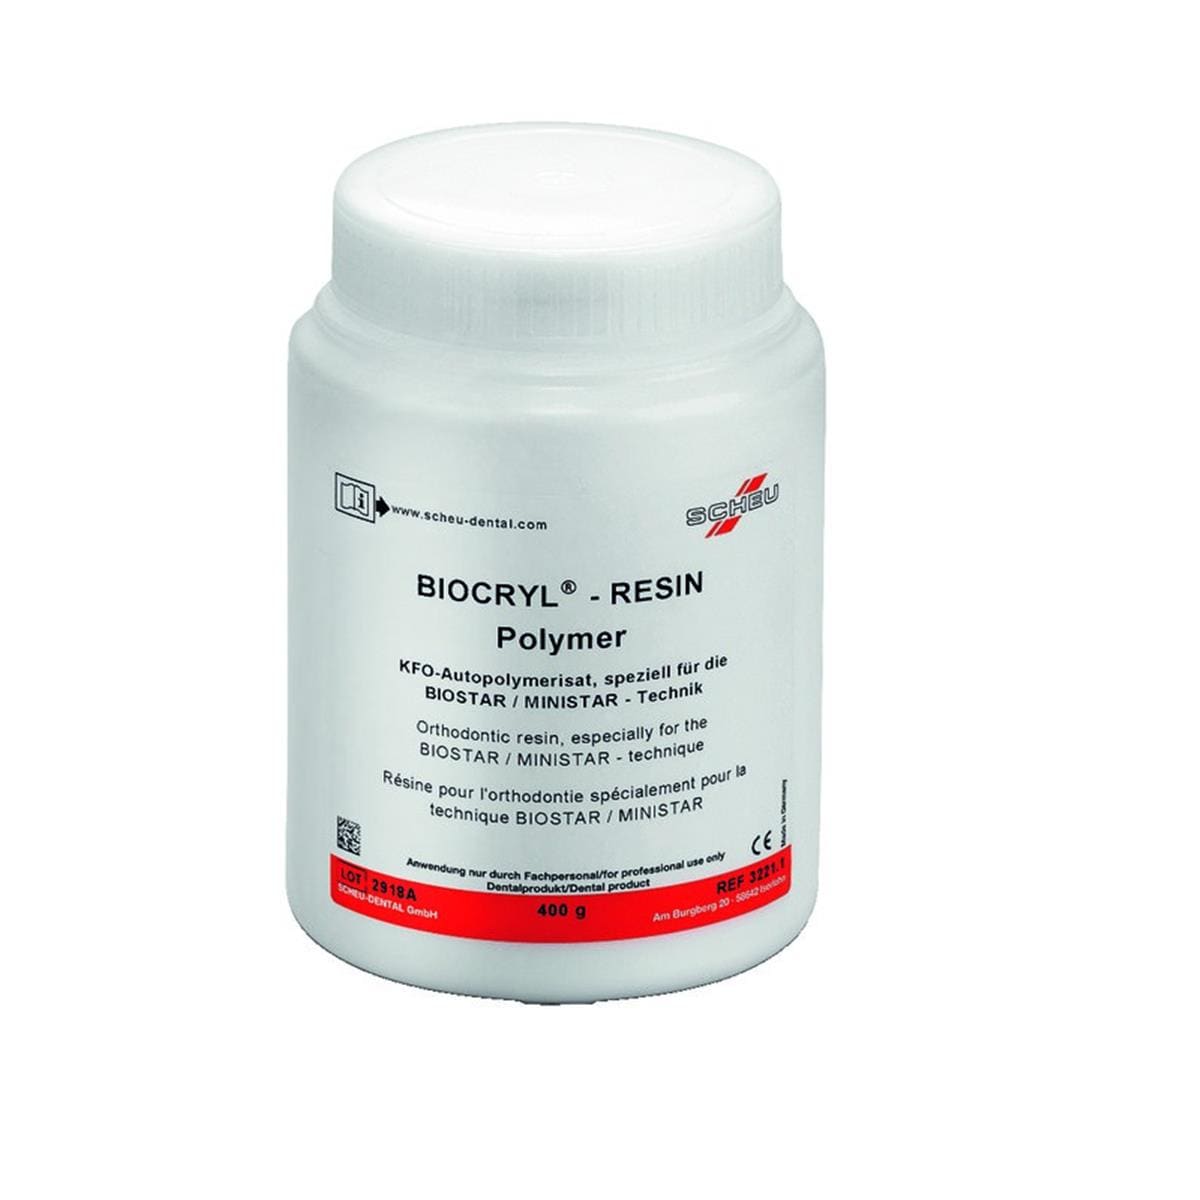 Biocryl-Rsin SCHEU-DENTAL - Polymre - La poudre de 400 g